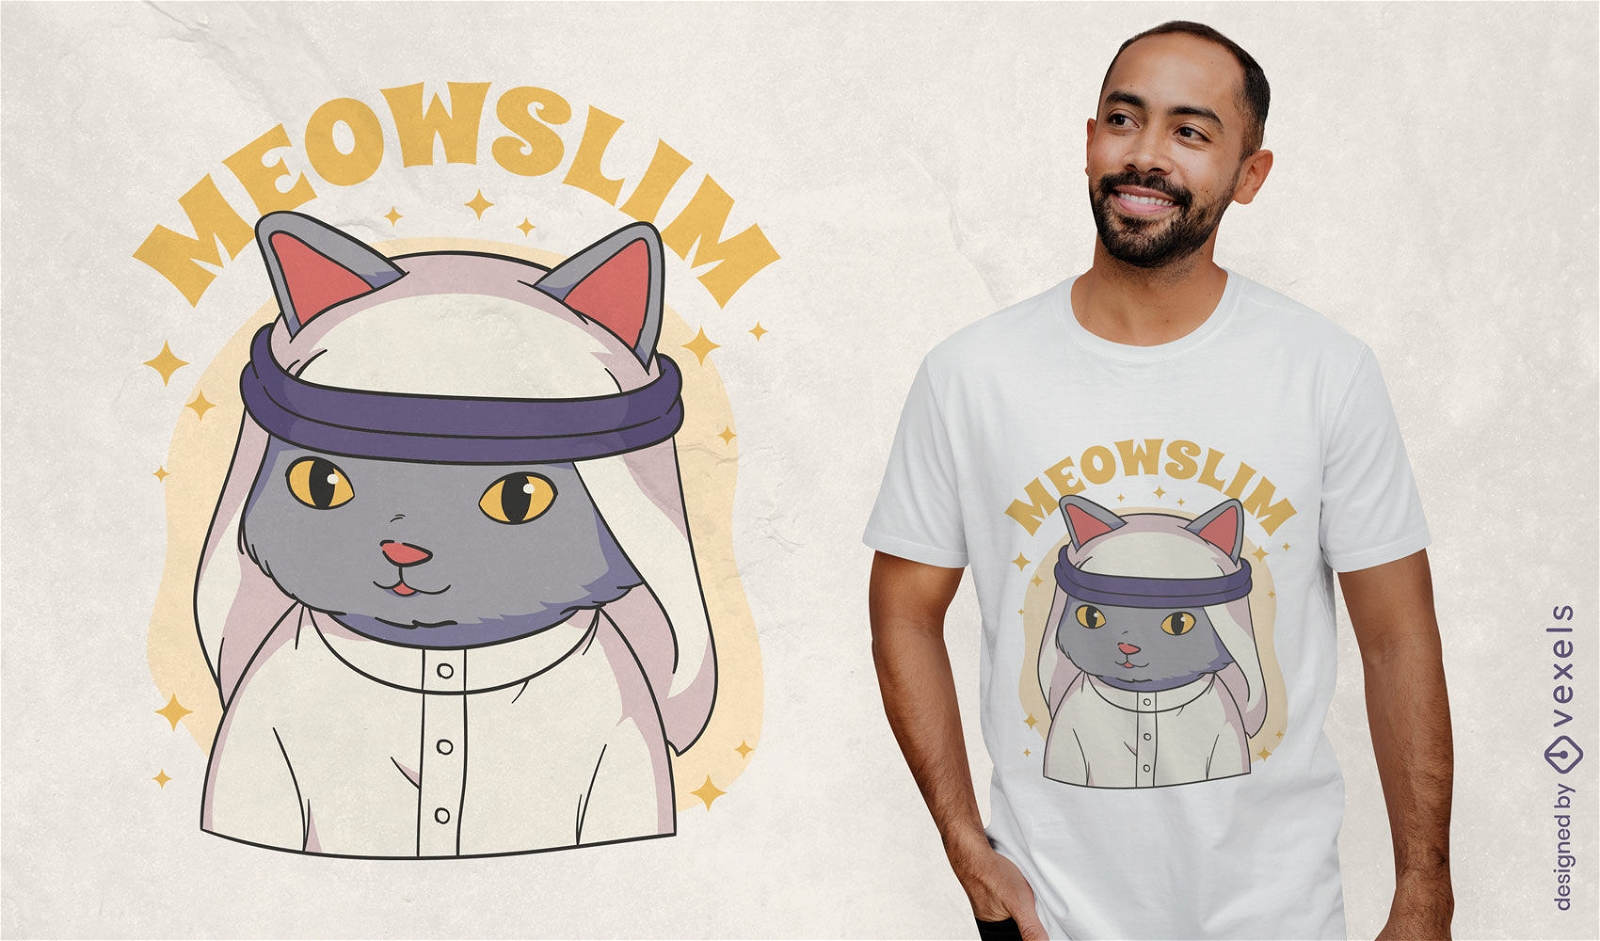 Muslim cat cartoon t-shirt design